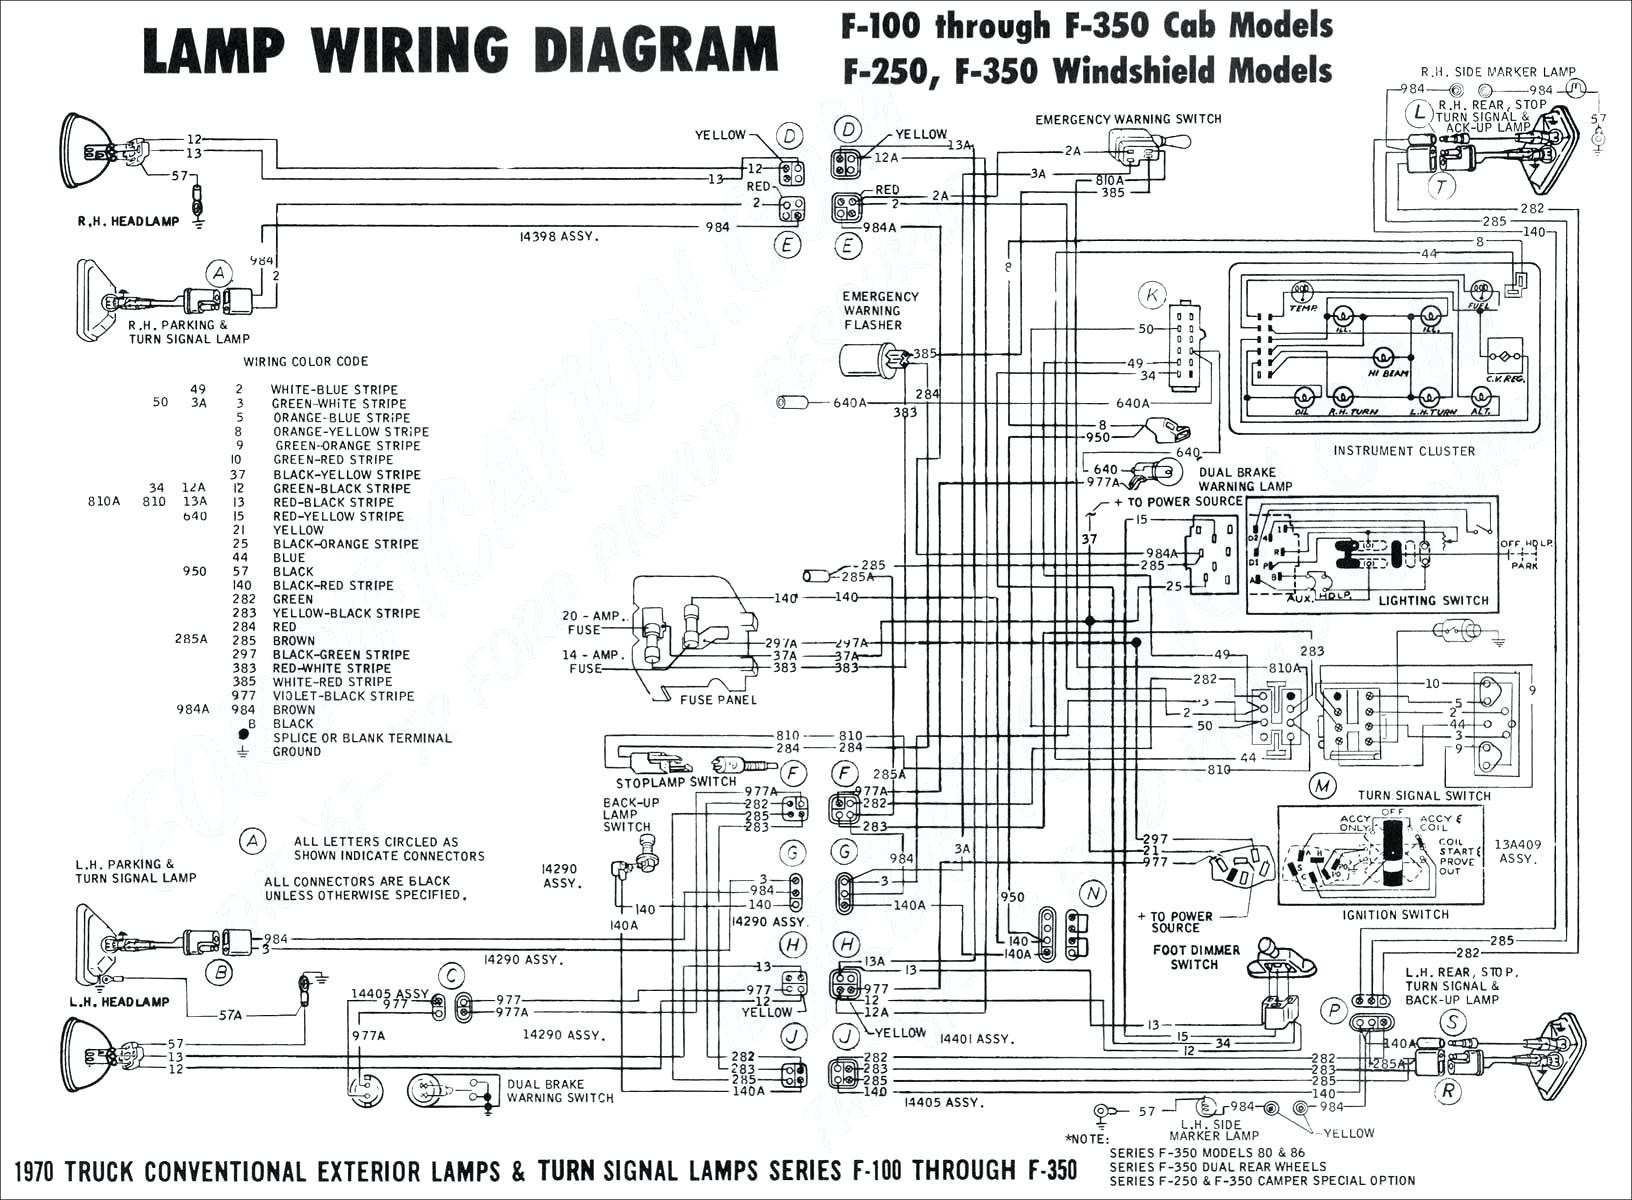 2008 Silverado Tail Light Wiring Diagram Fresh Hq Alternator Wiring Diagram Inspirational Hot Alternator Wiring